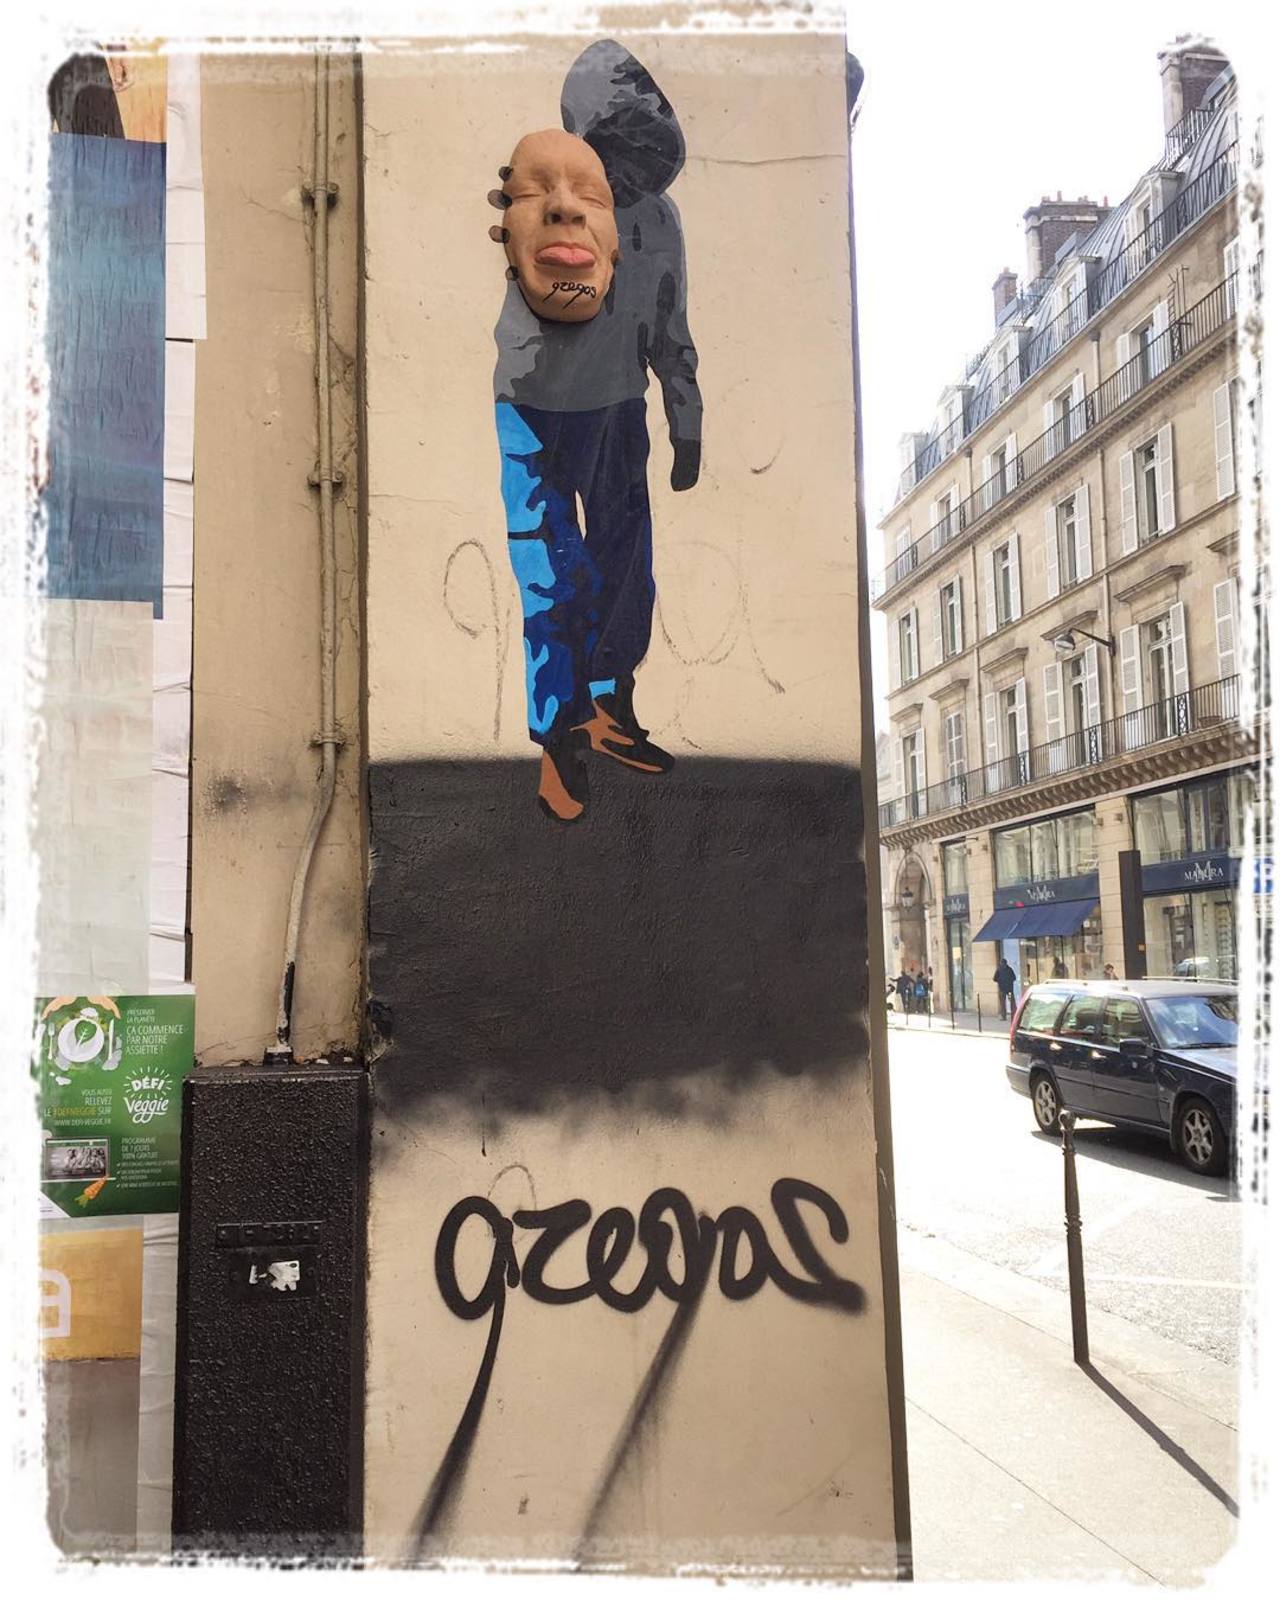 #Paris #graffiti photo by @gabyinparis http://ift.tt/1N0pLda #StreetArt https://t.co/J9sSzkd2Hj